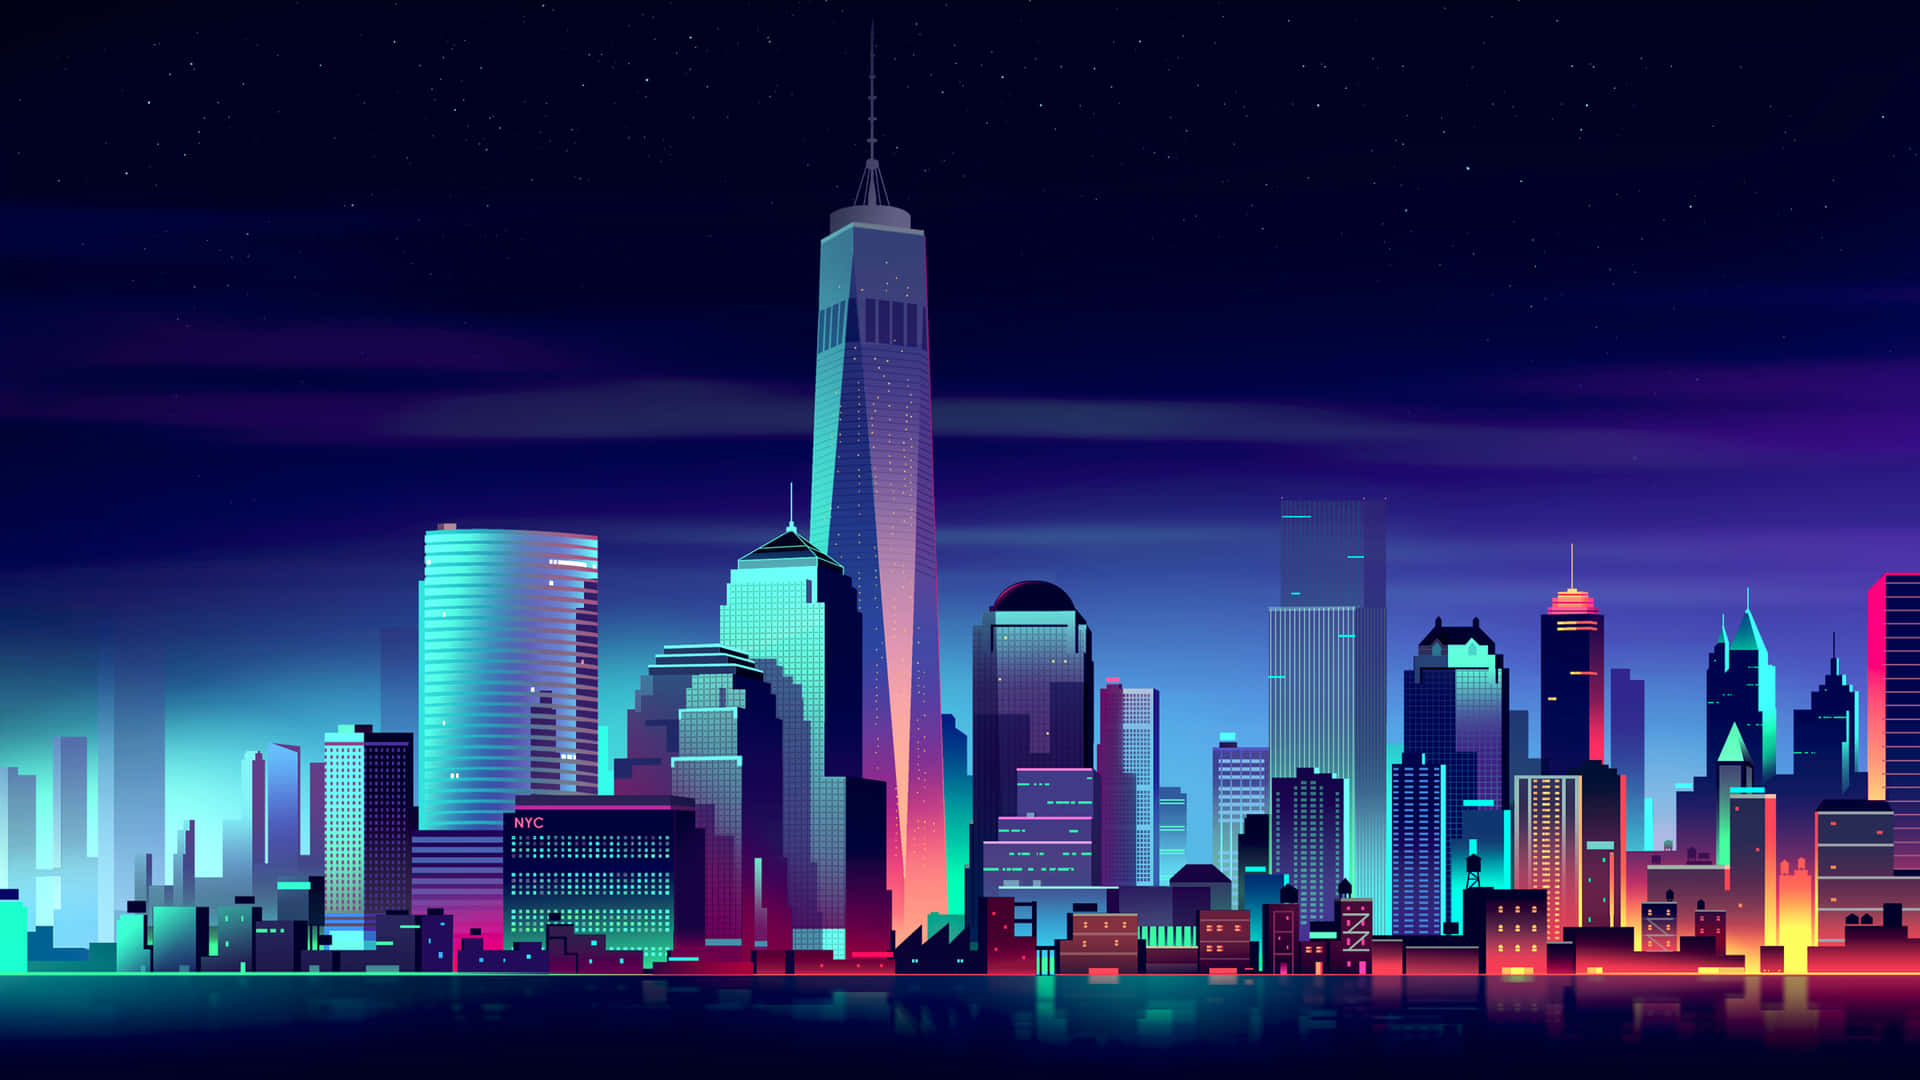 City Background